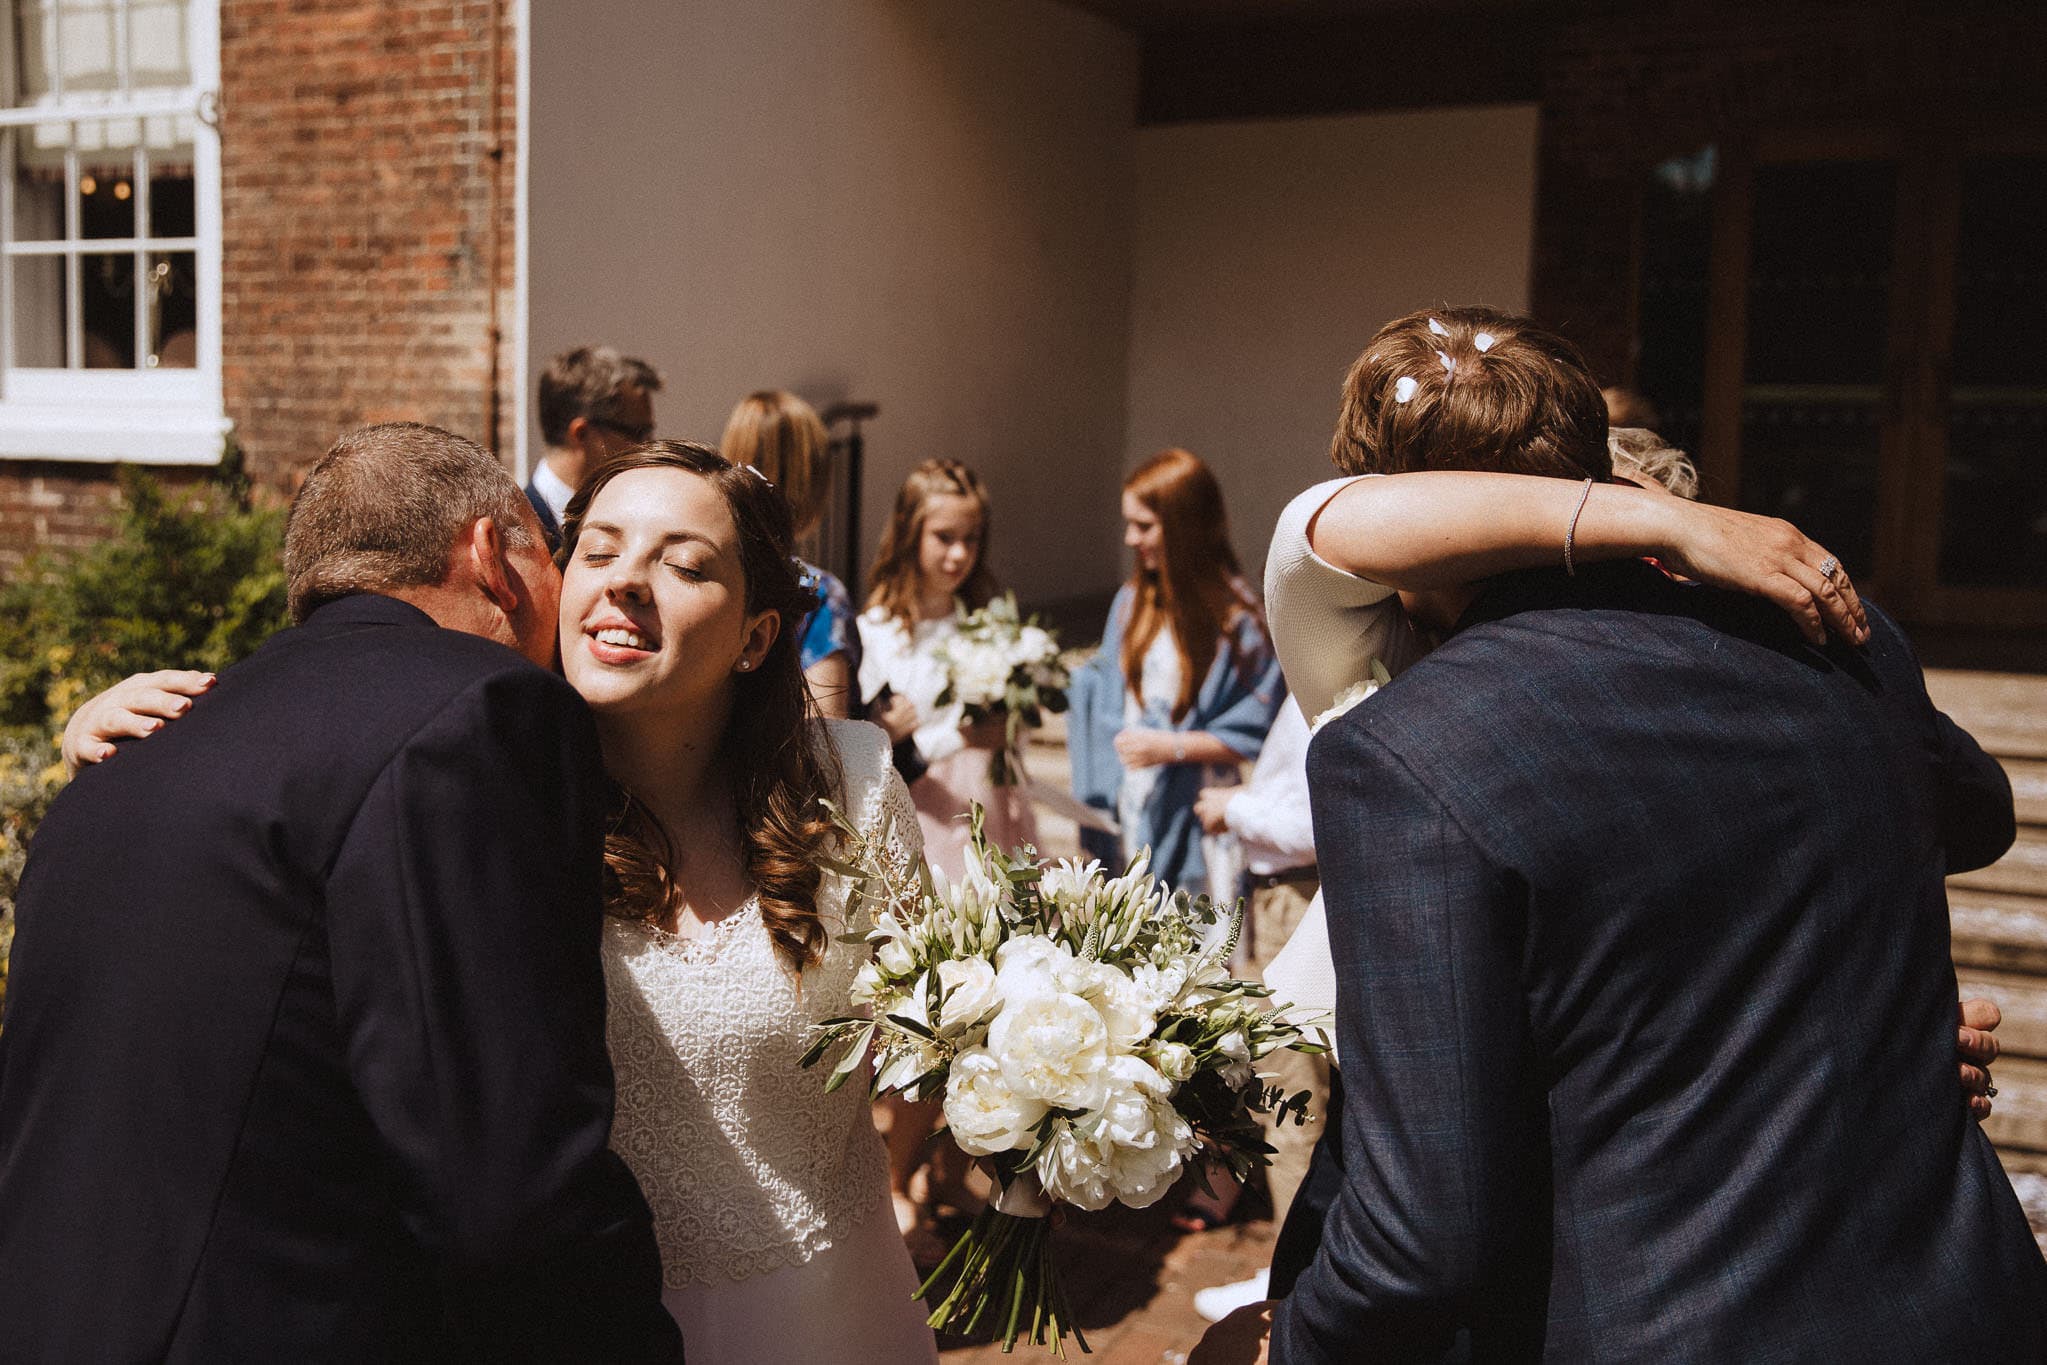 capturing moments at weddings